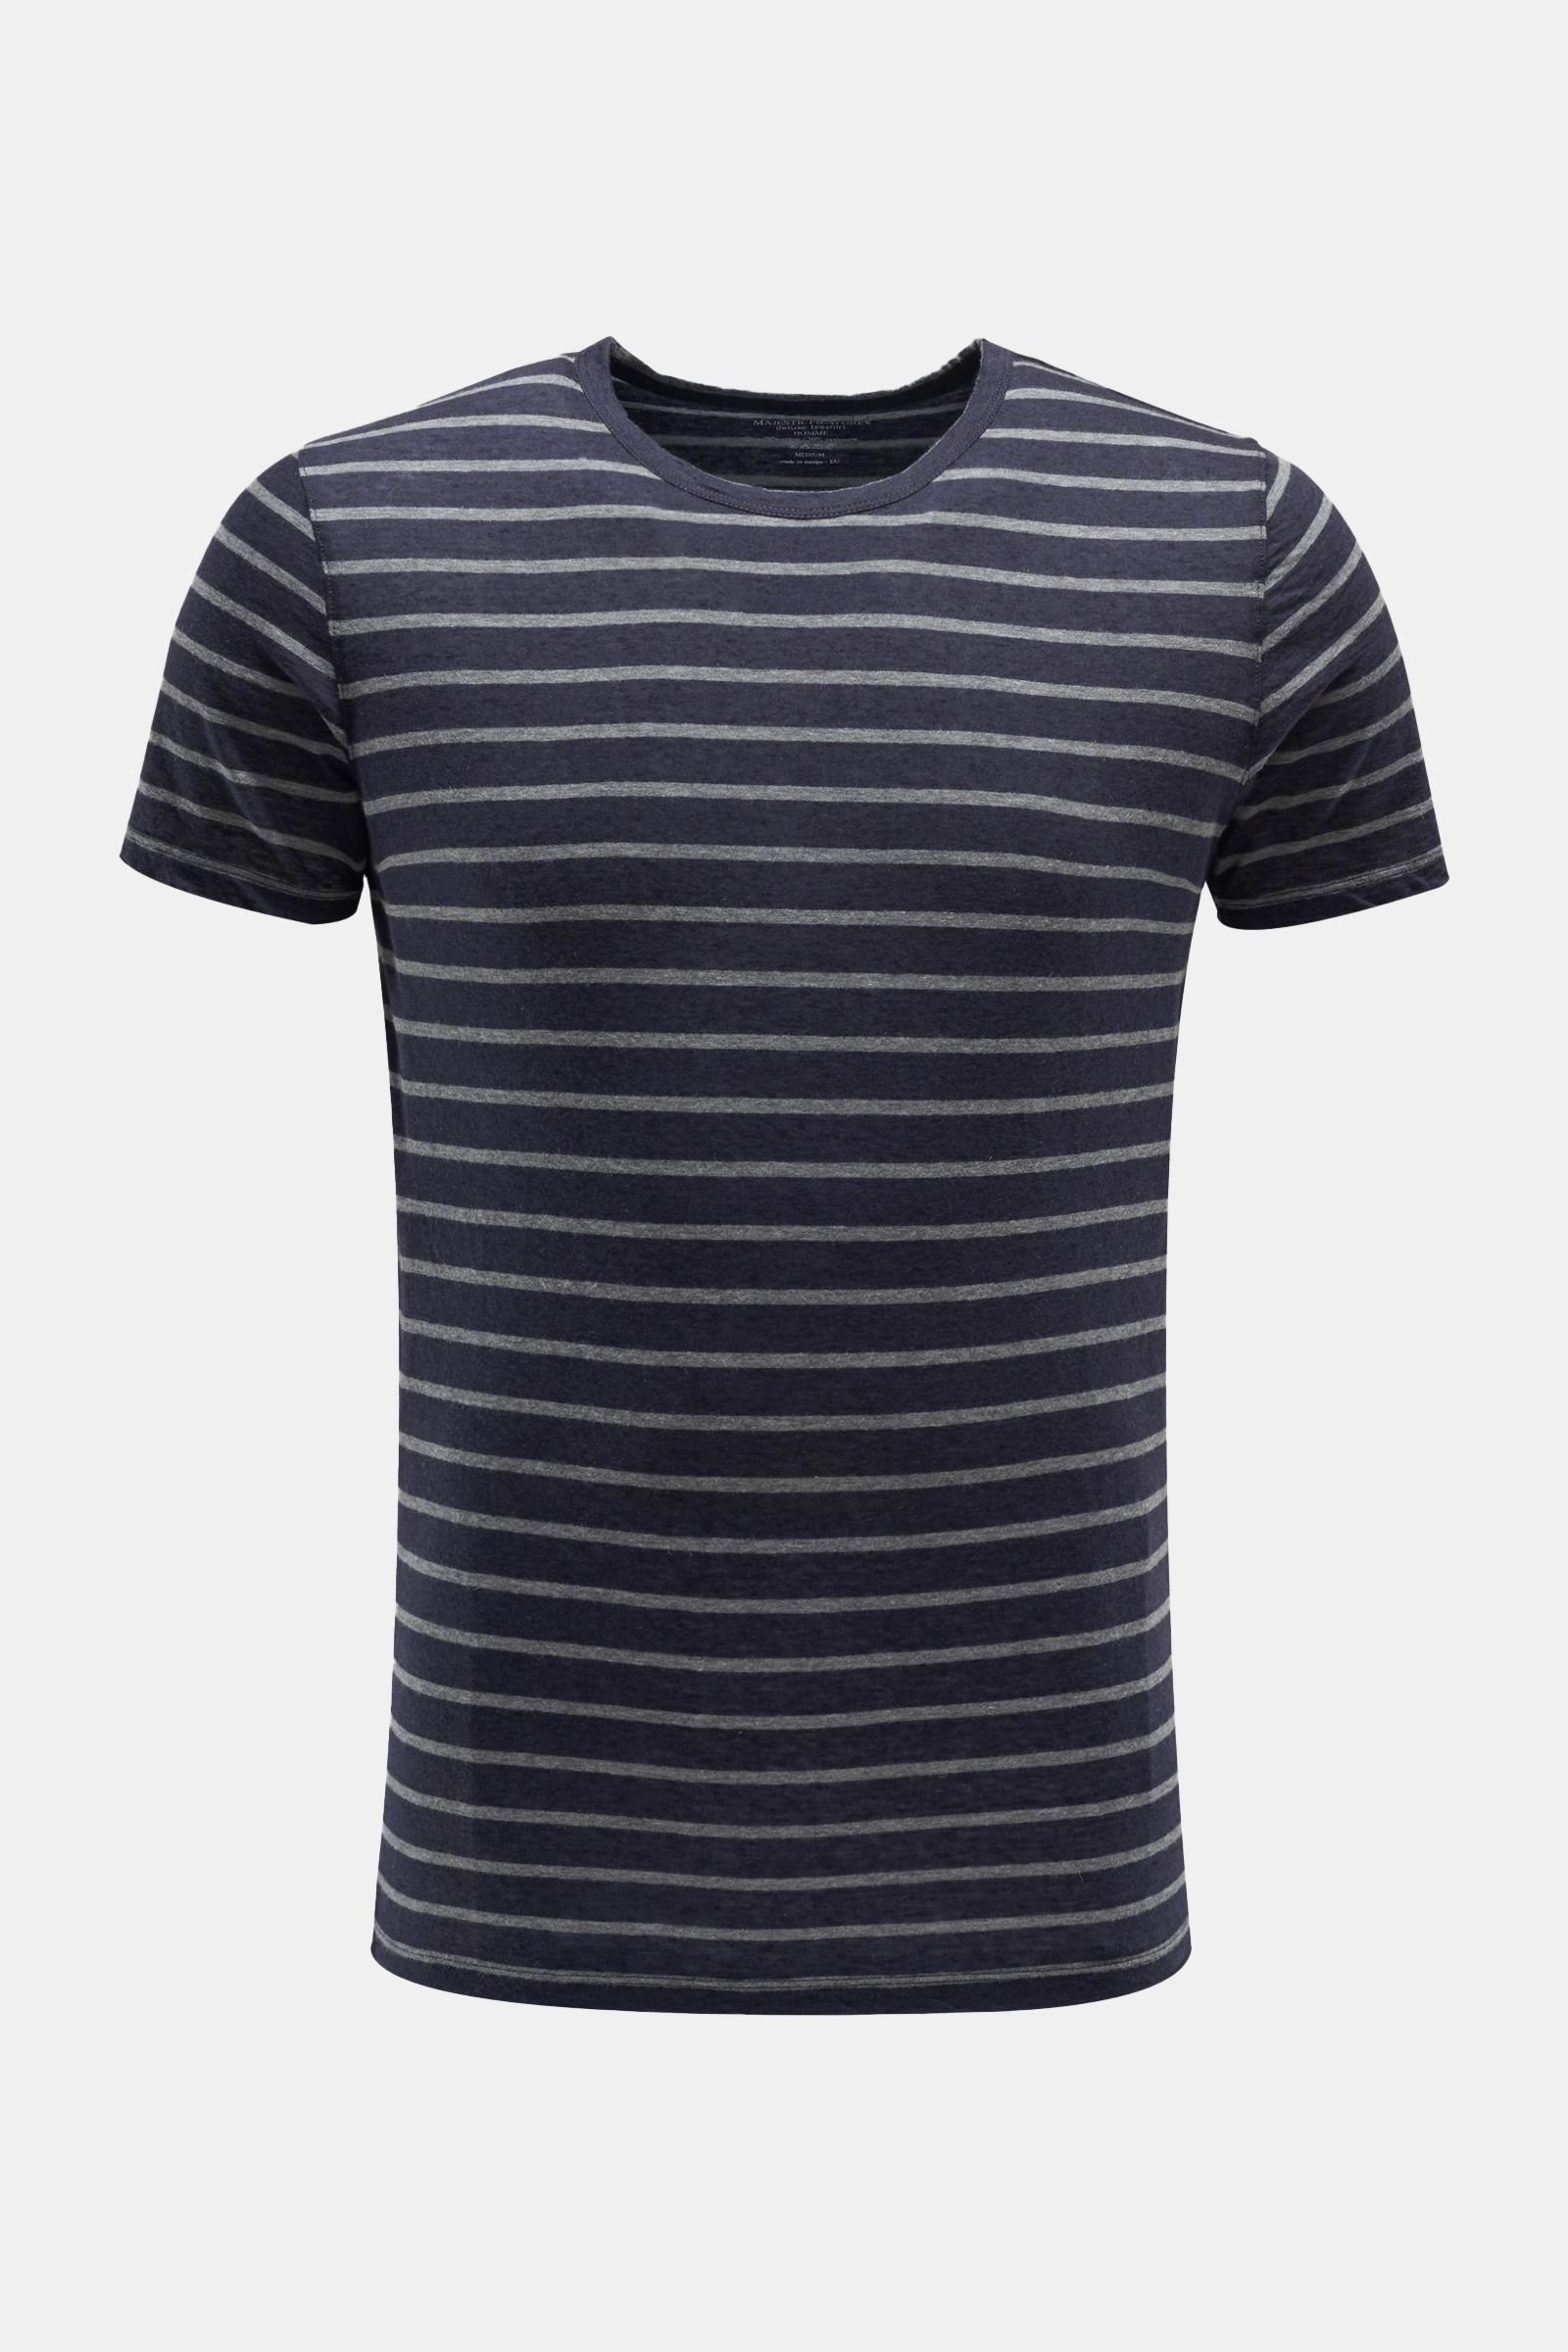 Crew neck T-shirt navy/grey striped